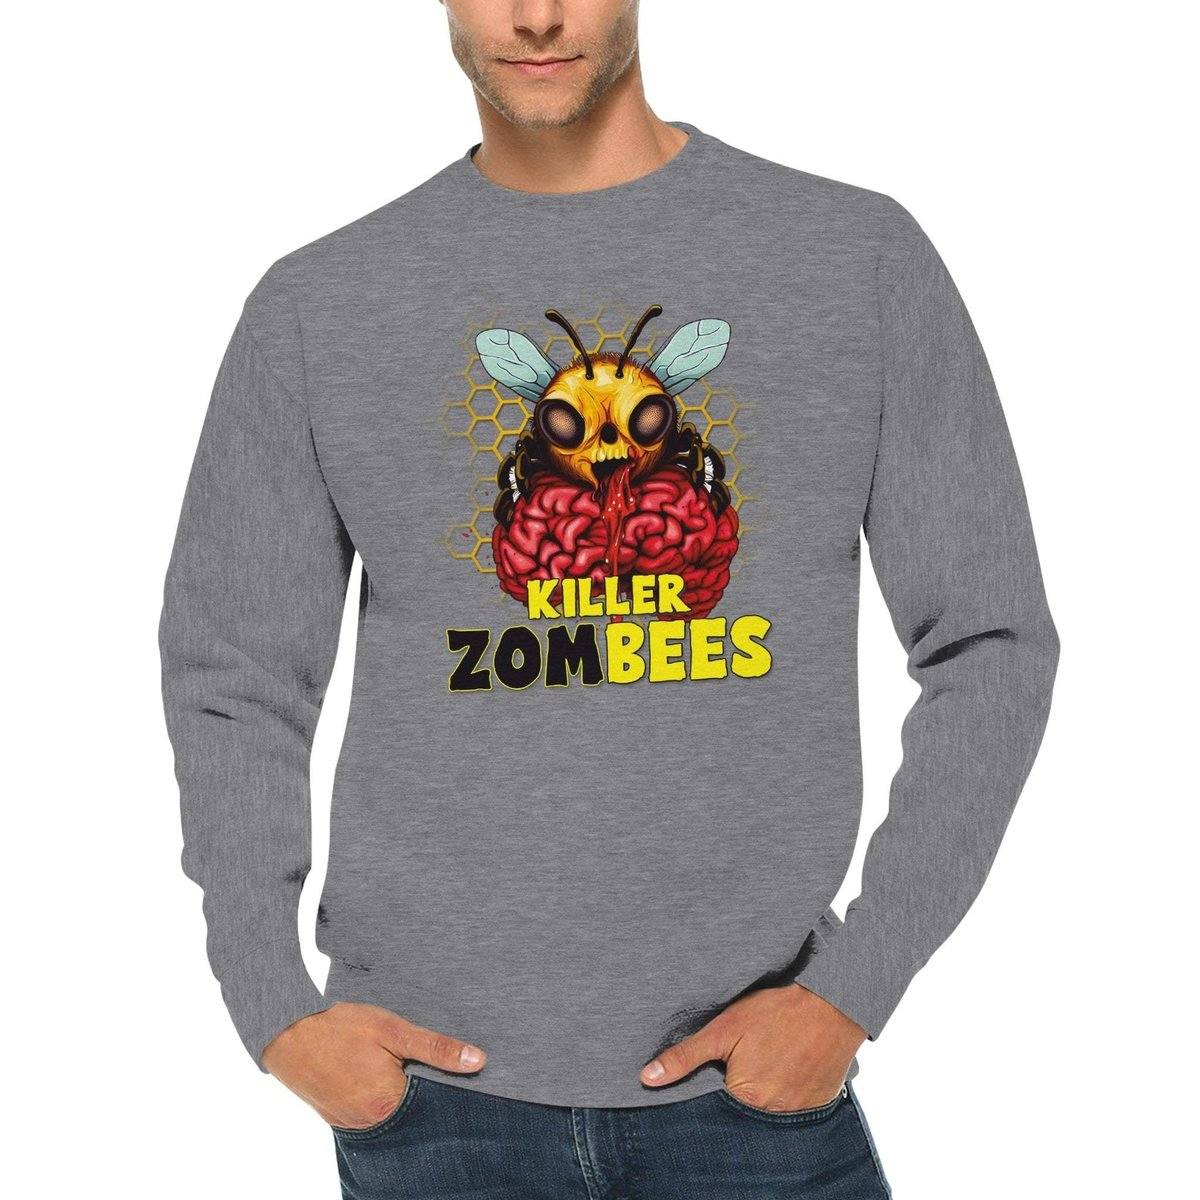 Killer Zombees - Premium Unisex Crewneck Sweatshirt Australia Online Color Heather Gray / S